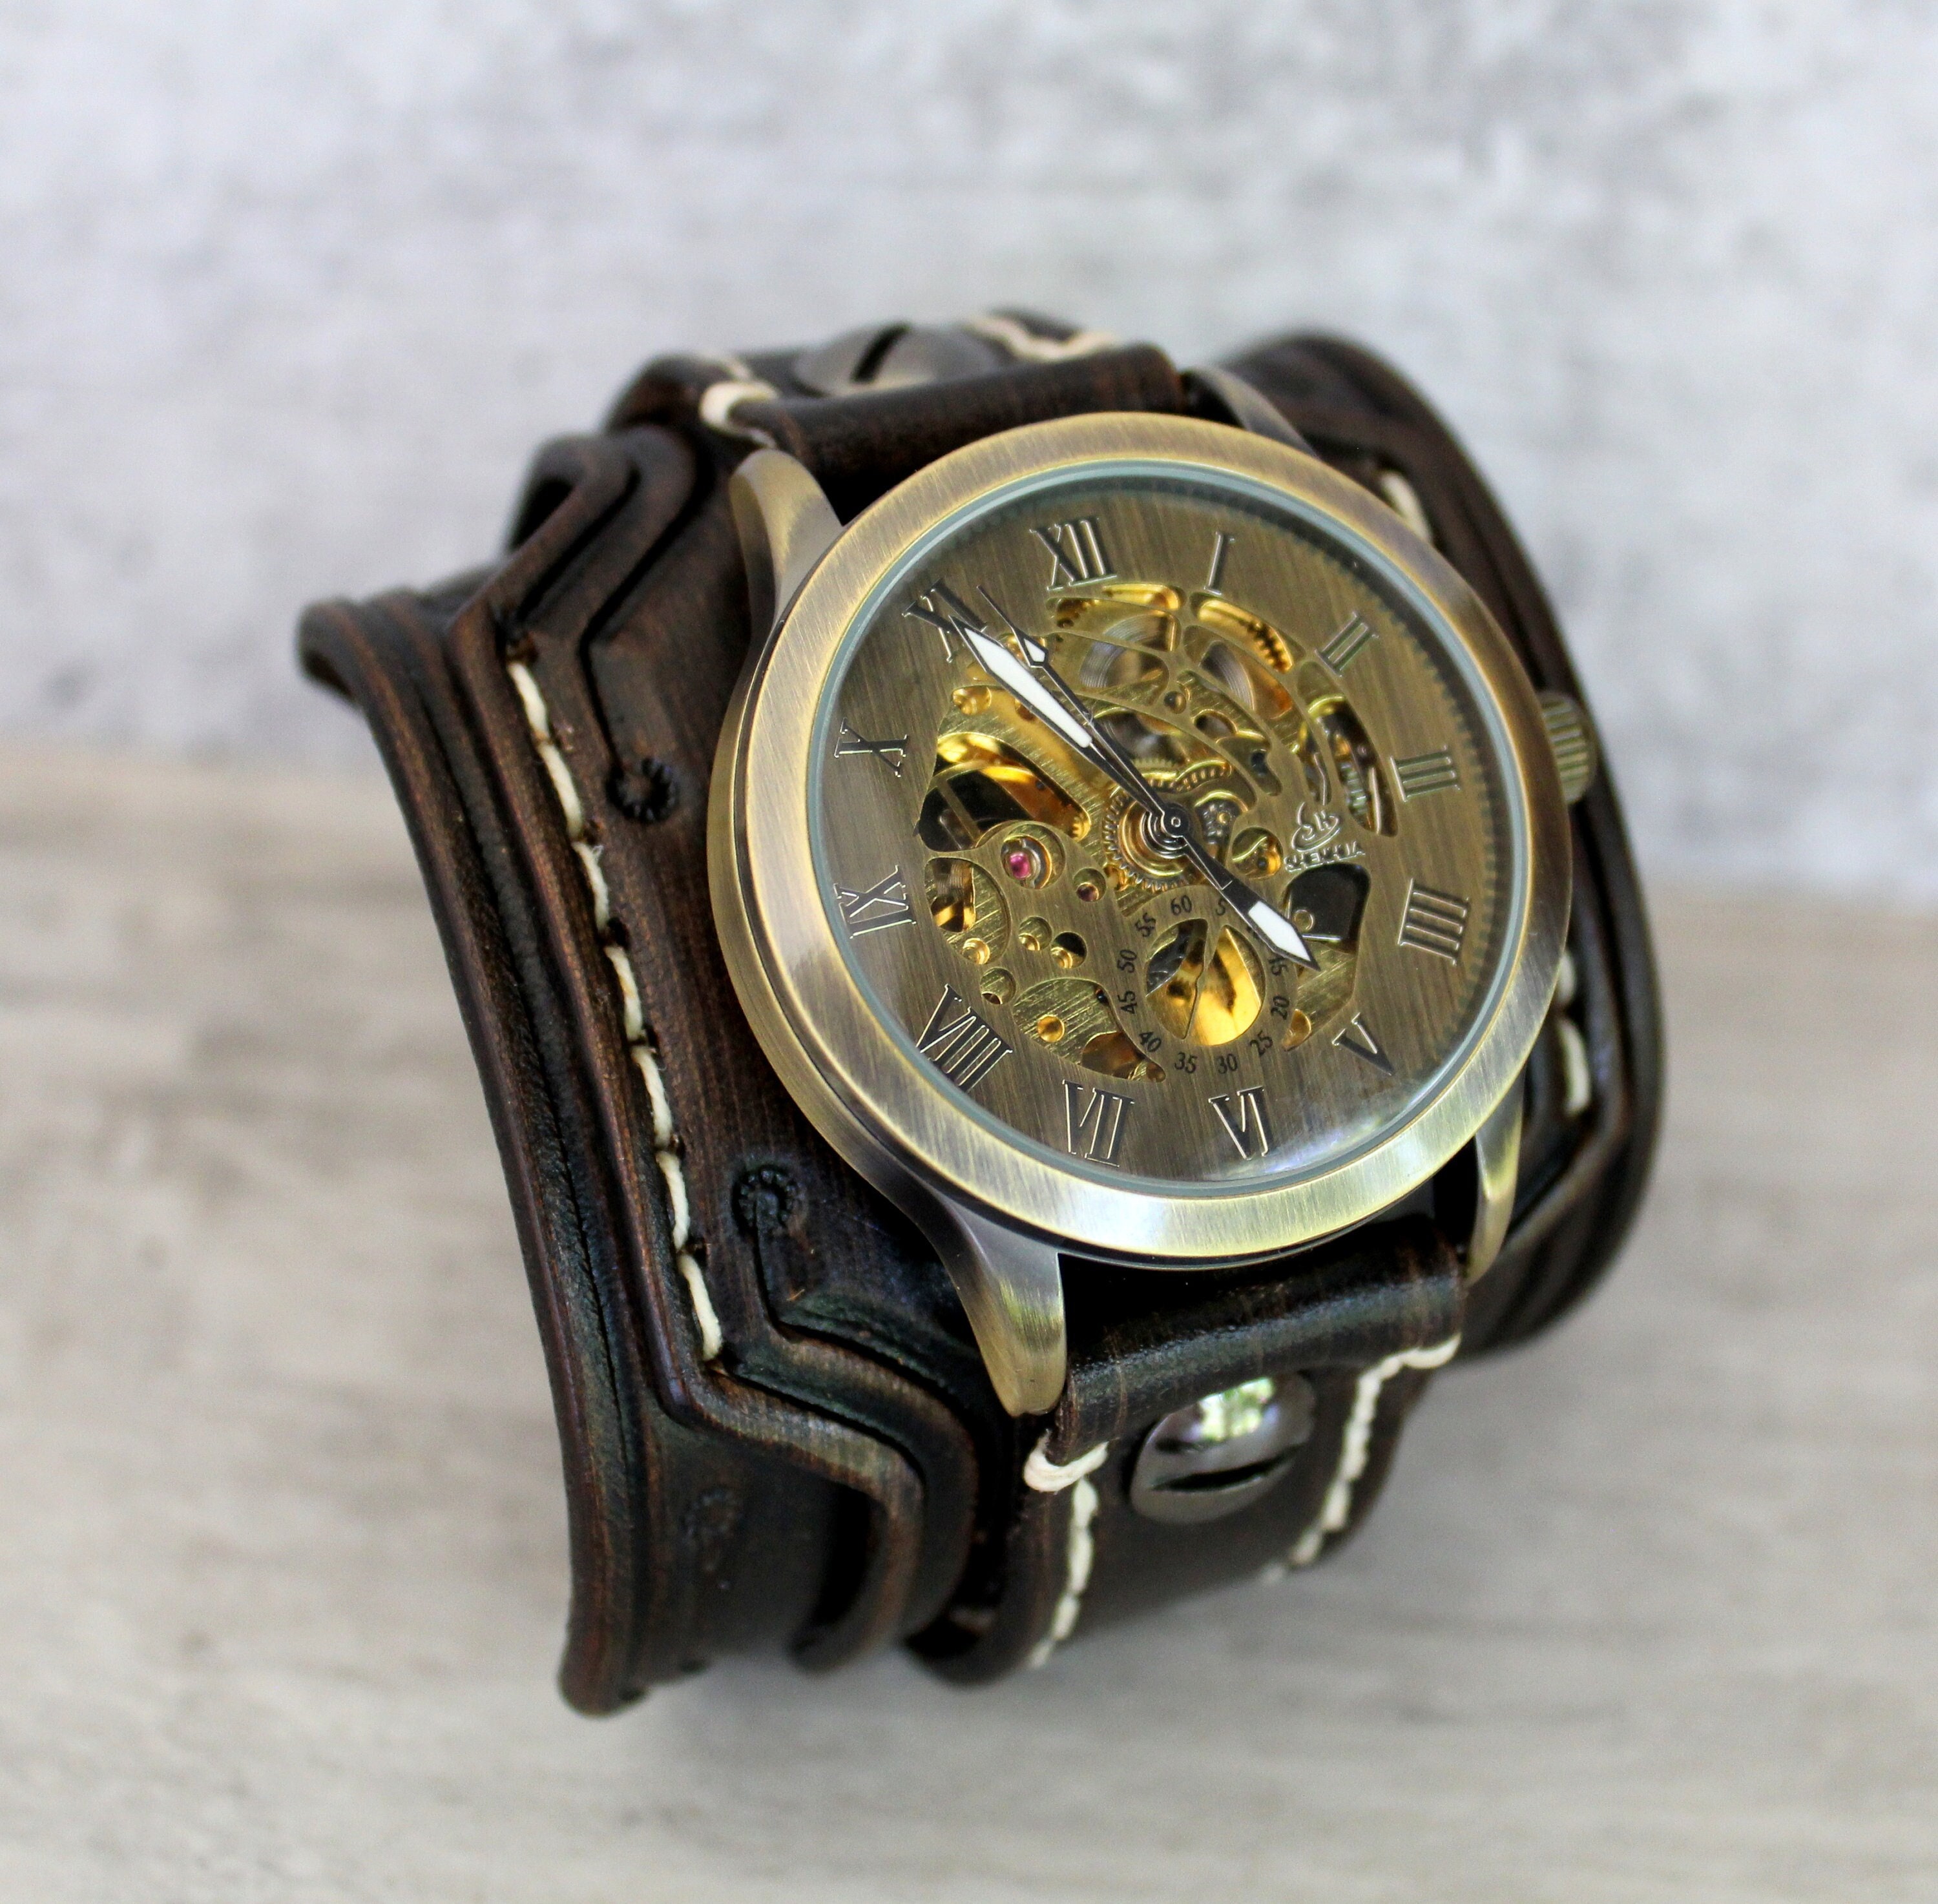 Steampunk Watch, Men's Watch, Leather Watch Cuff, Leather Wrist Watch ,  Bracelet Watch, Mens Gift, Anniversary Gift, Black, Engraved Watch 